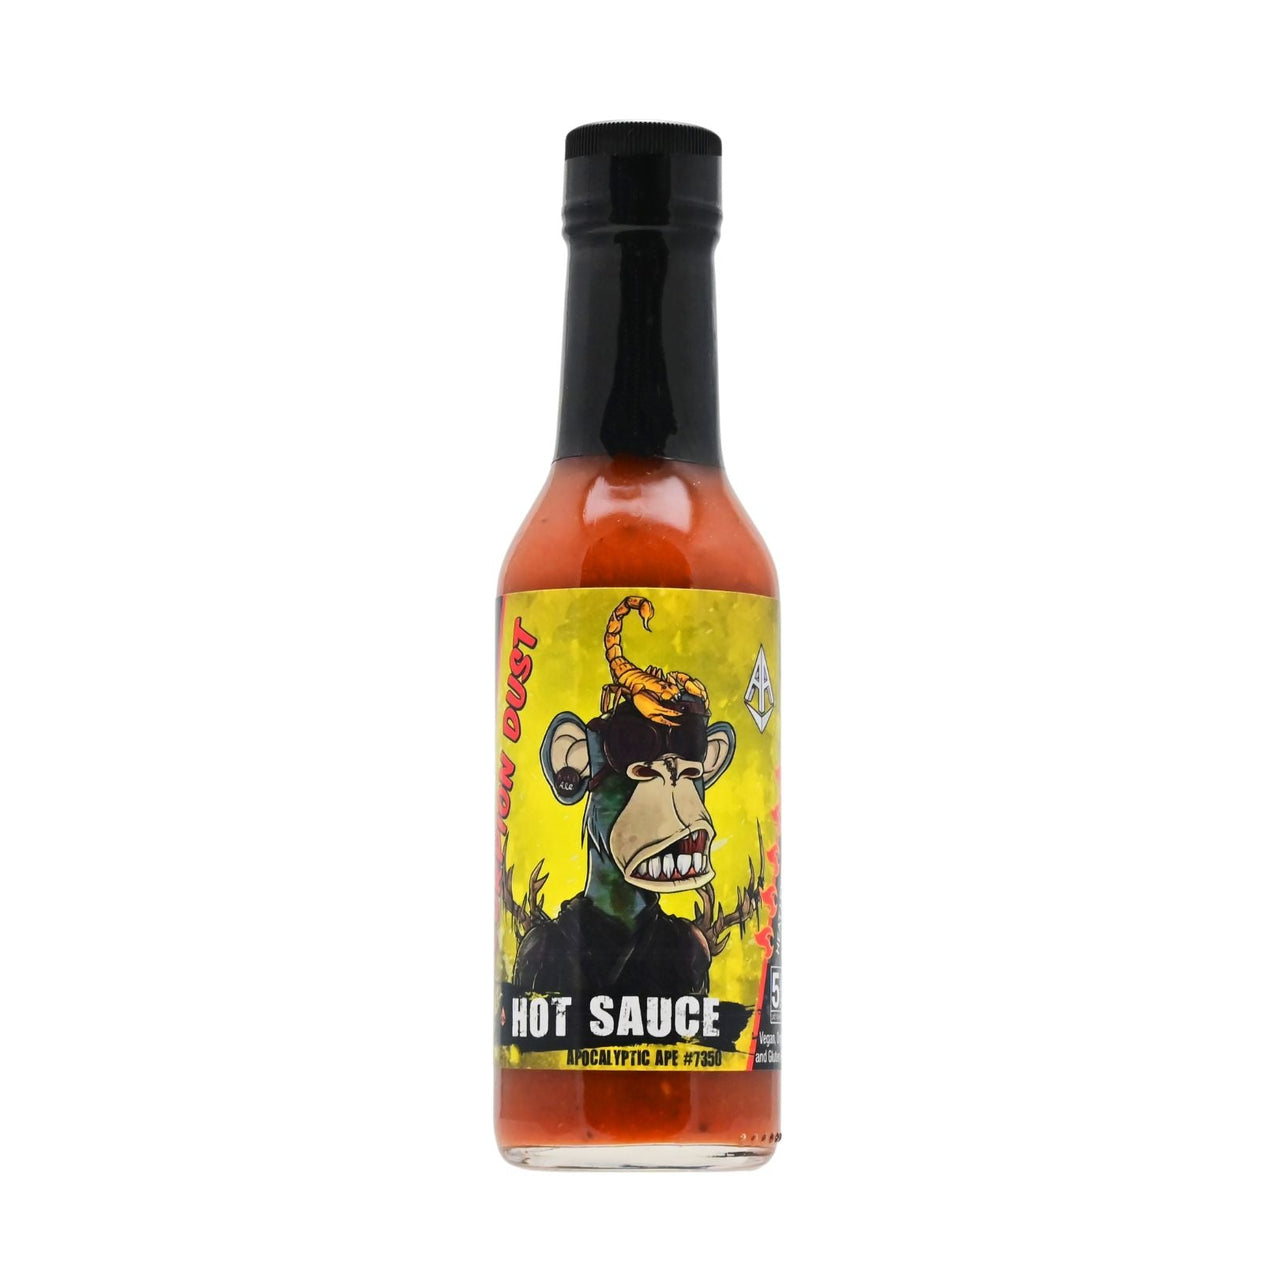 Apocalyptic Ape #7350 Scorpion Dust Hot Sauce